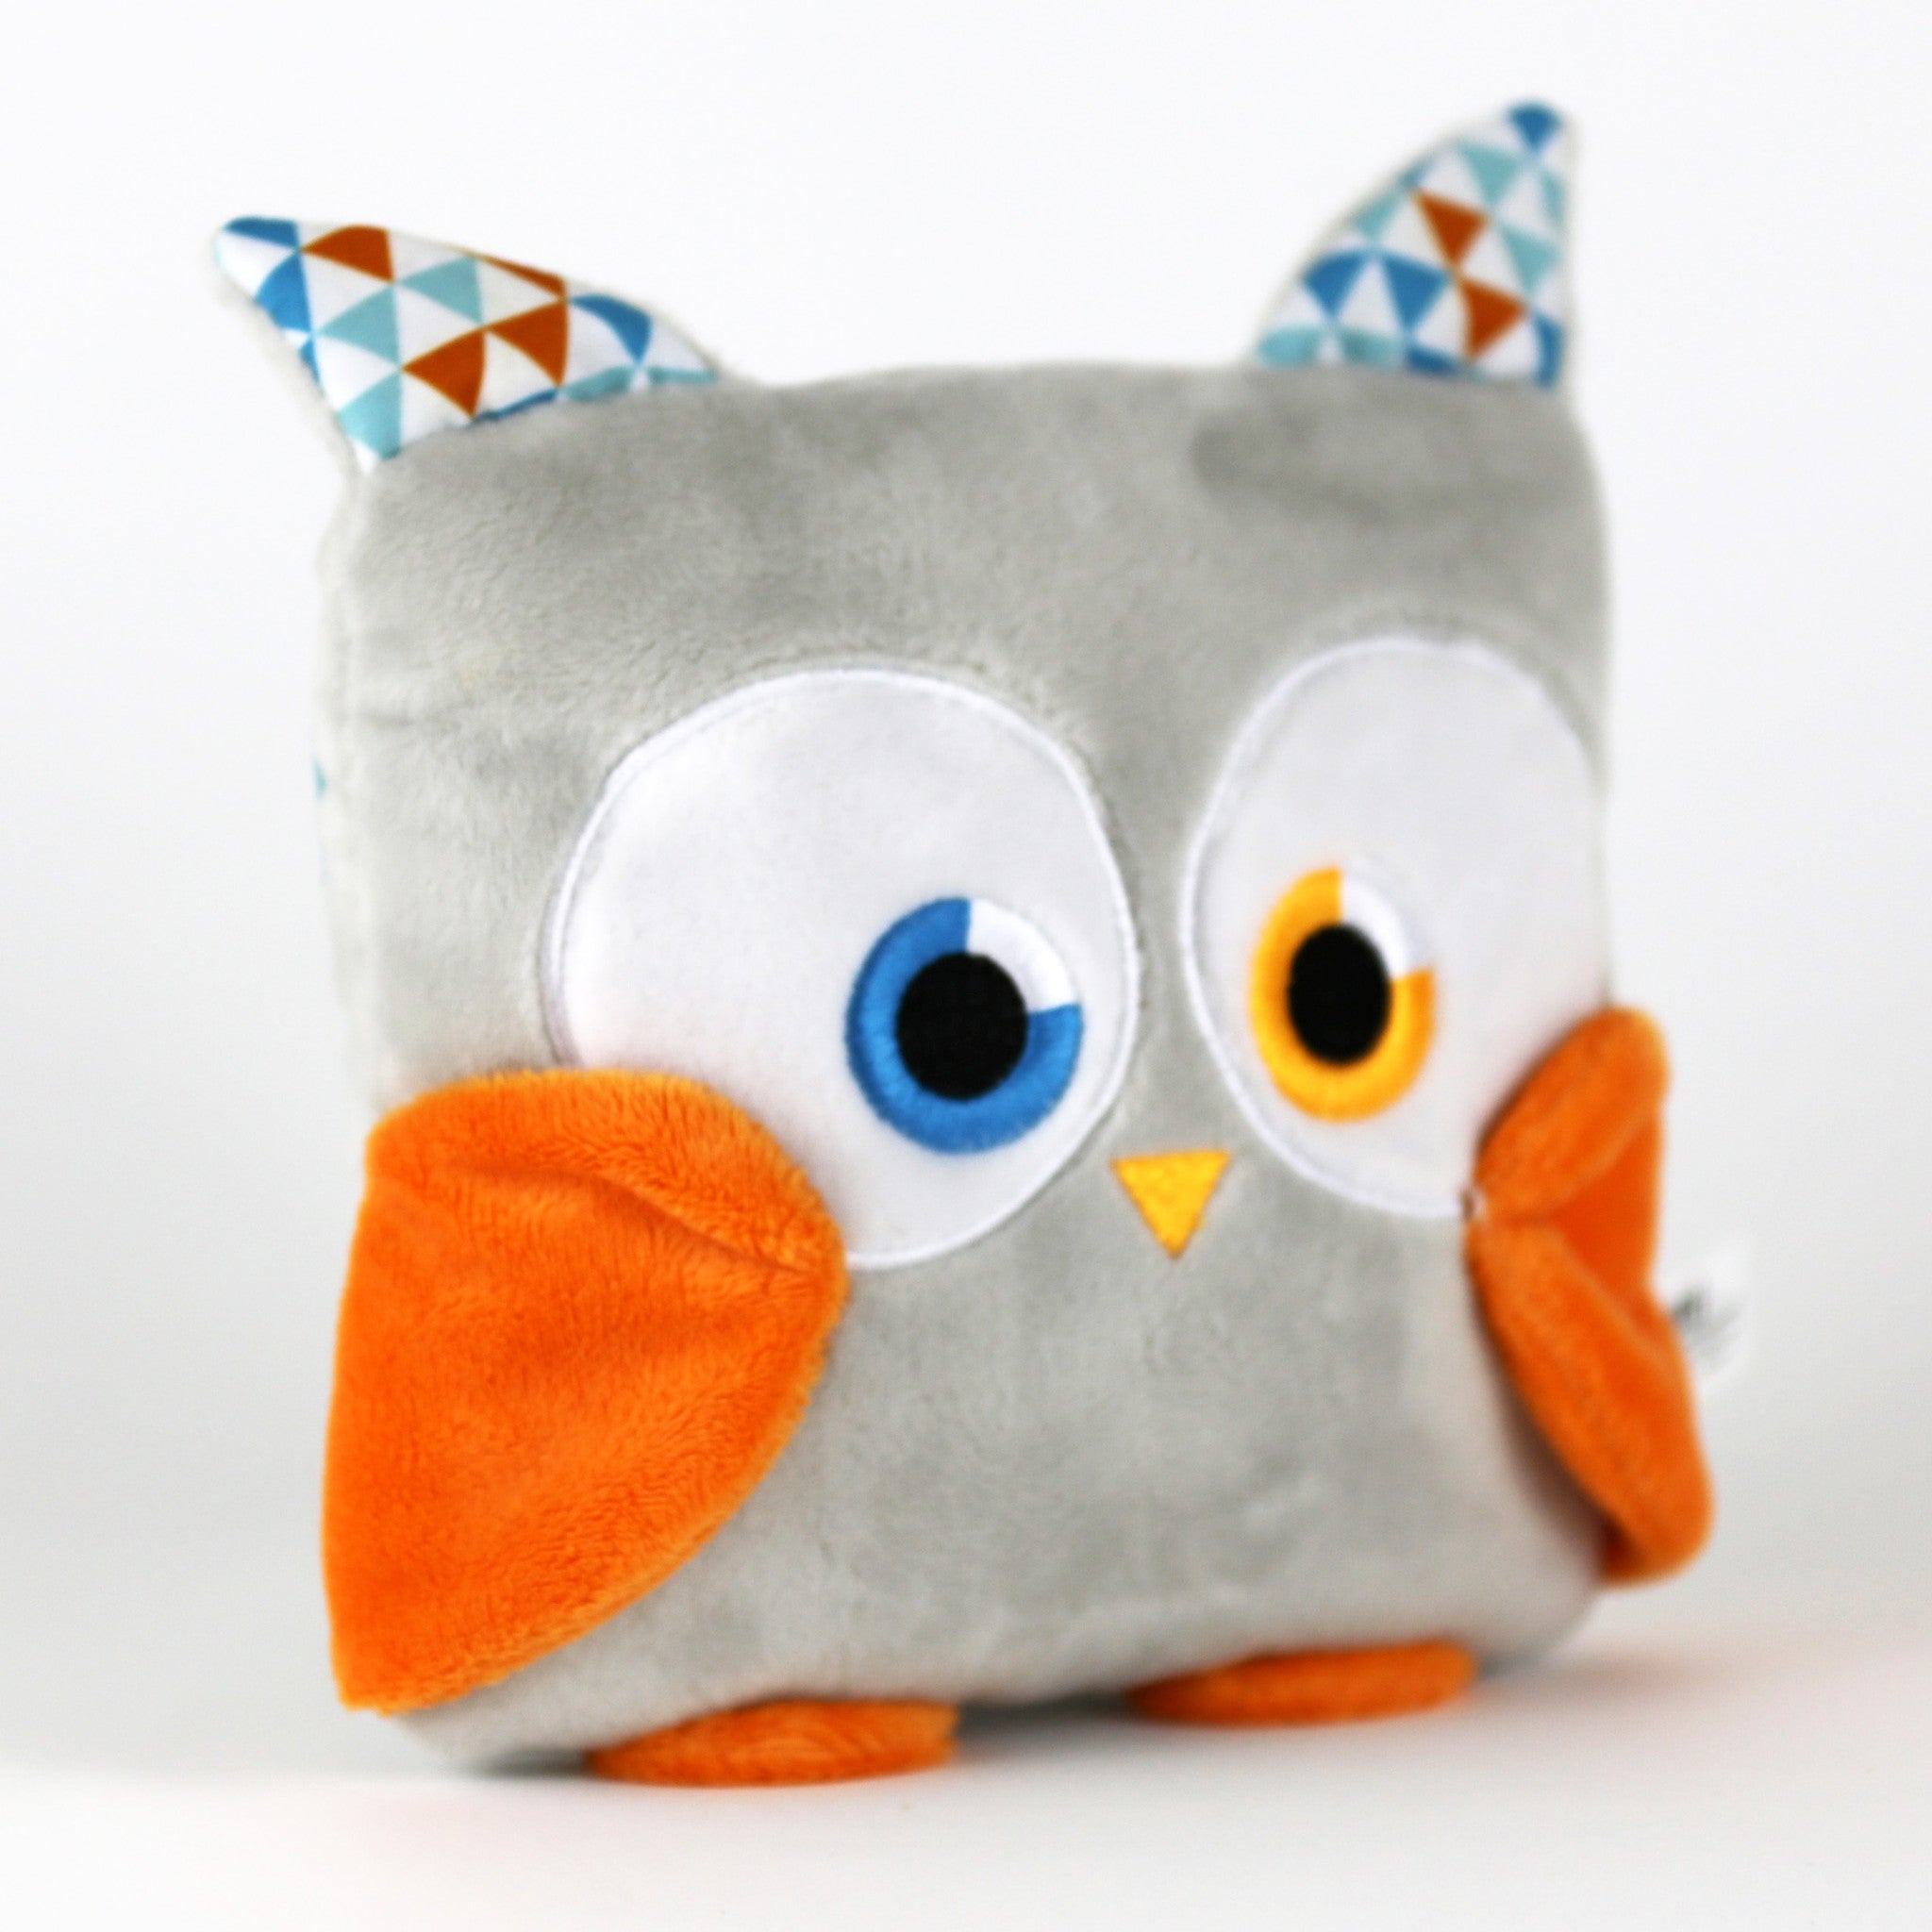 Poketti plush toy owl stuffed animal bird with a useful back pocket